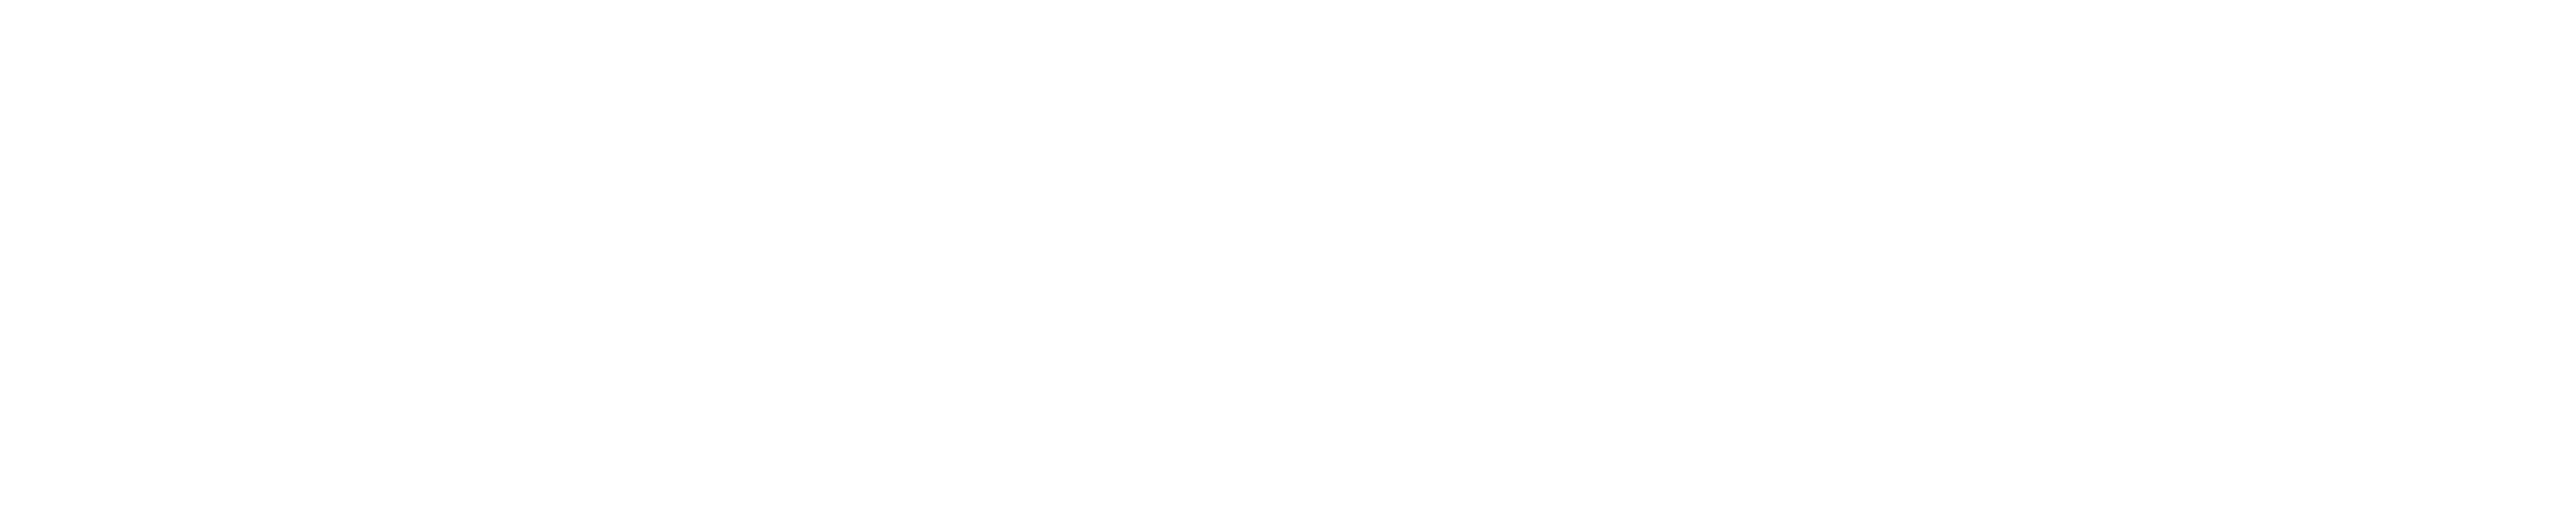 iFixandRepair Logo